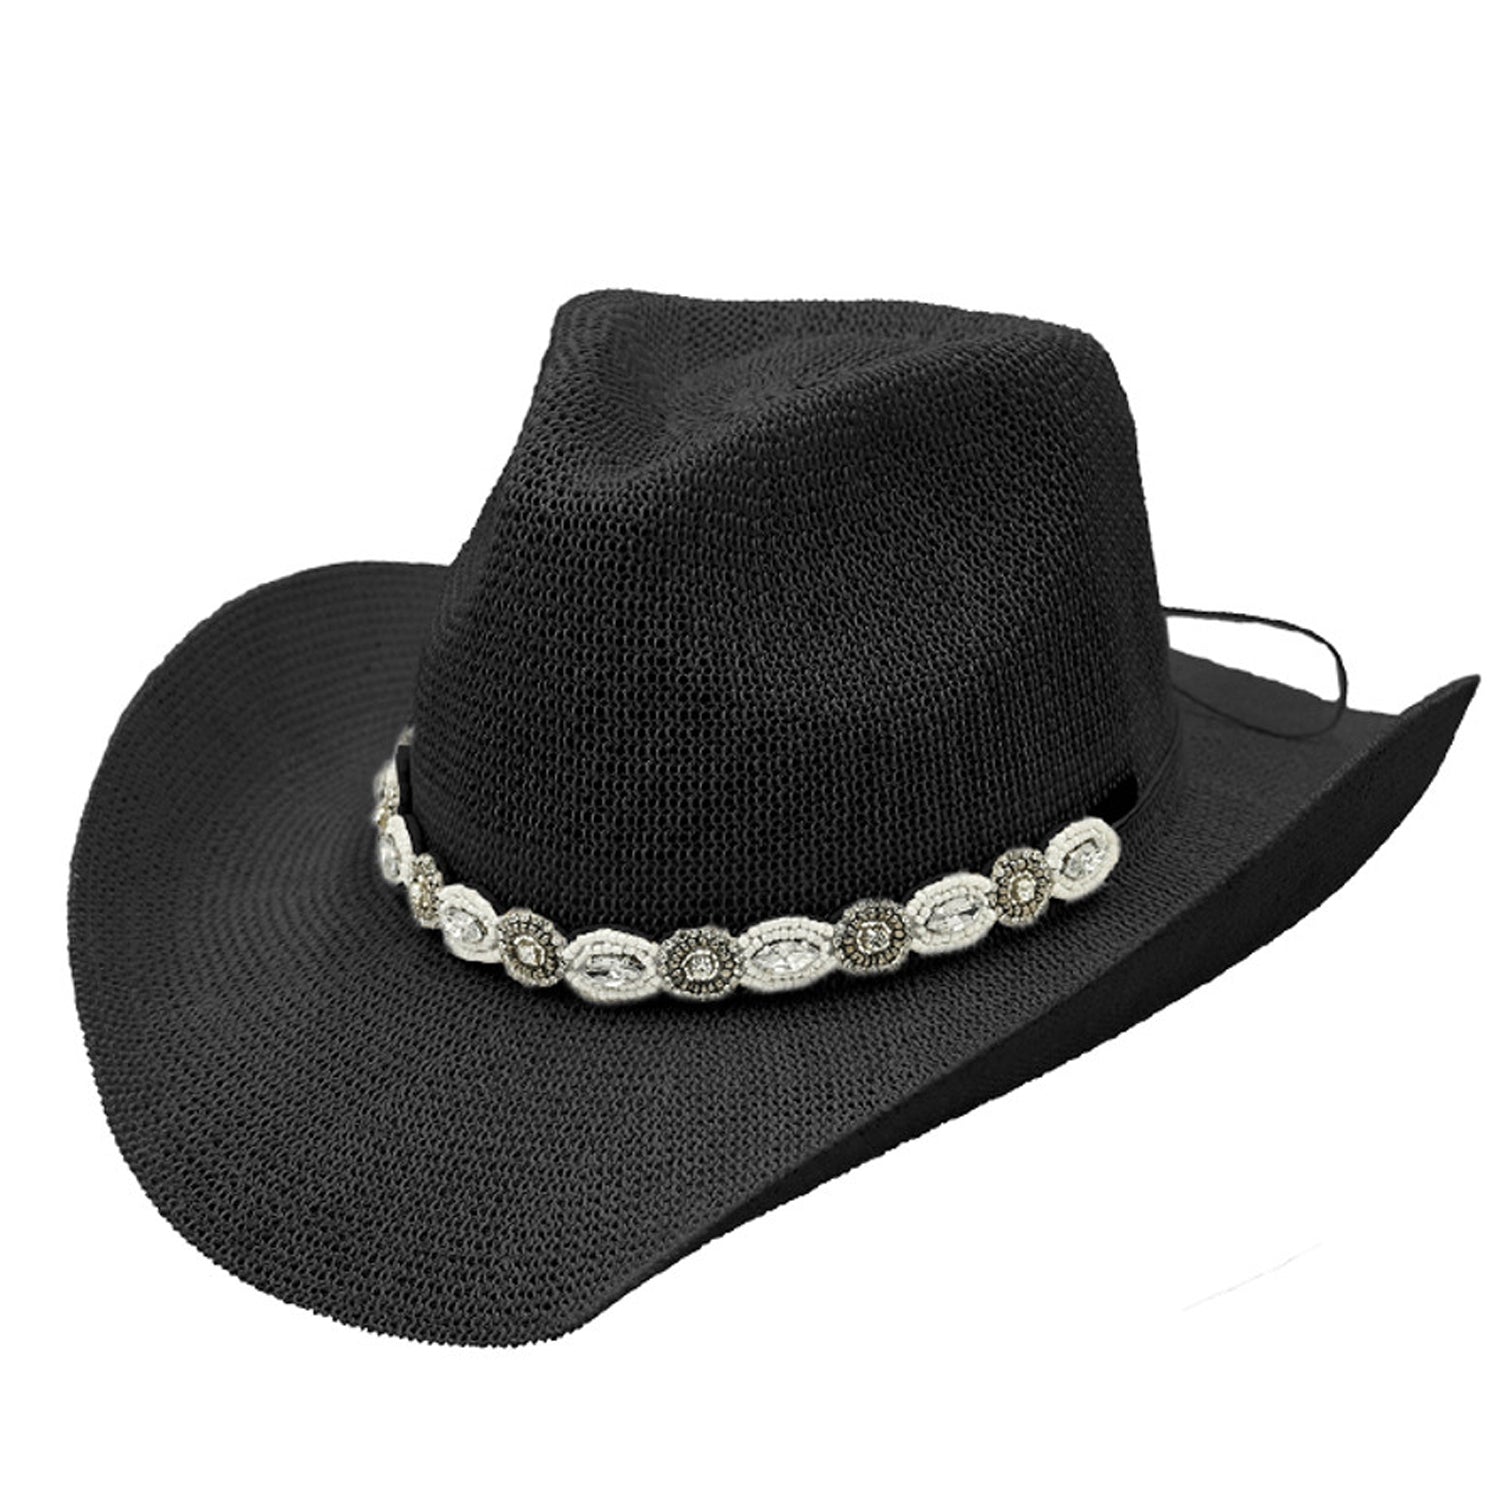 CBC-08 Cowgirl Hat Black